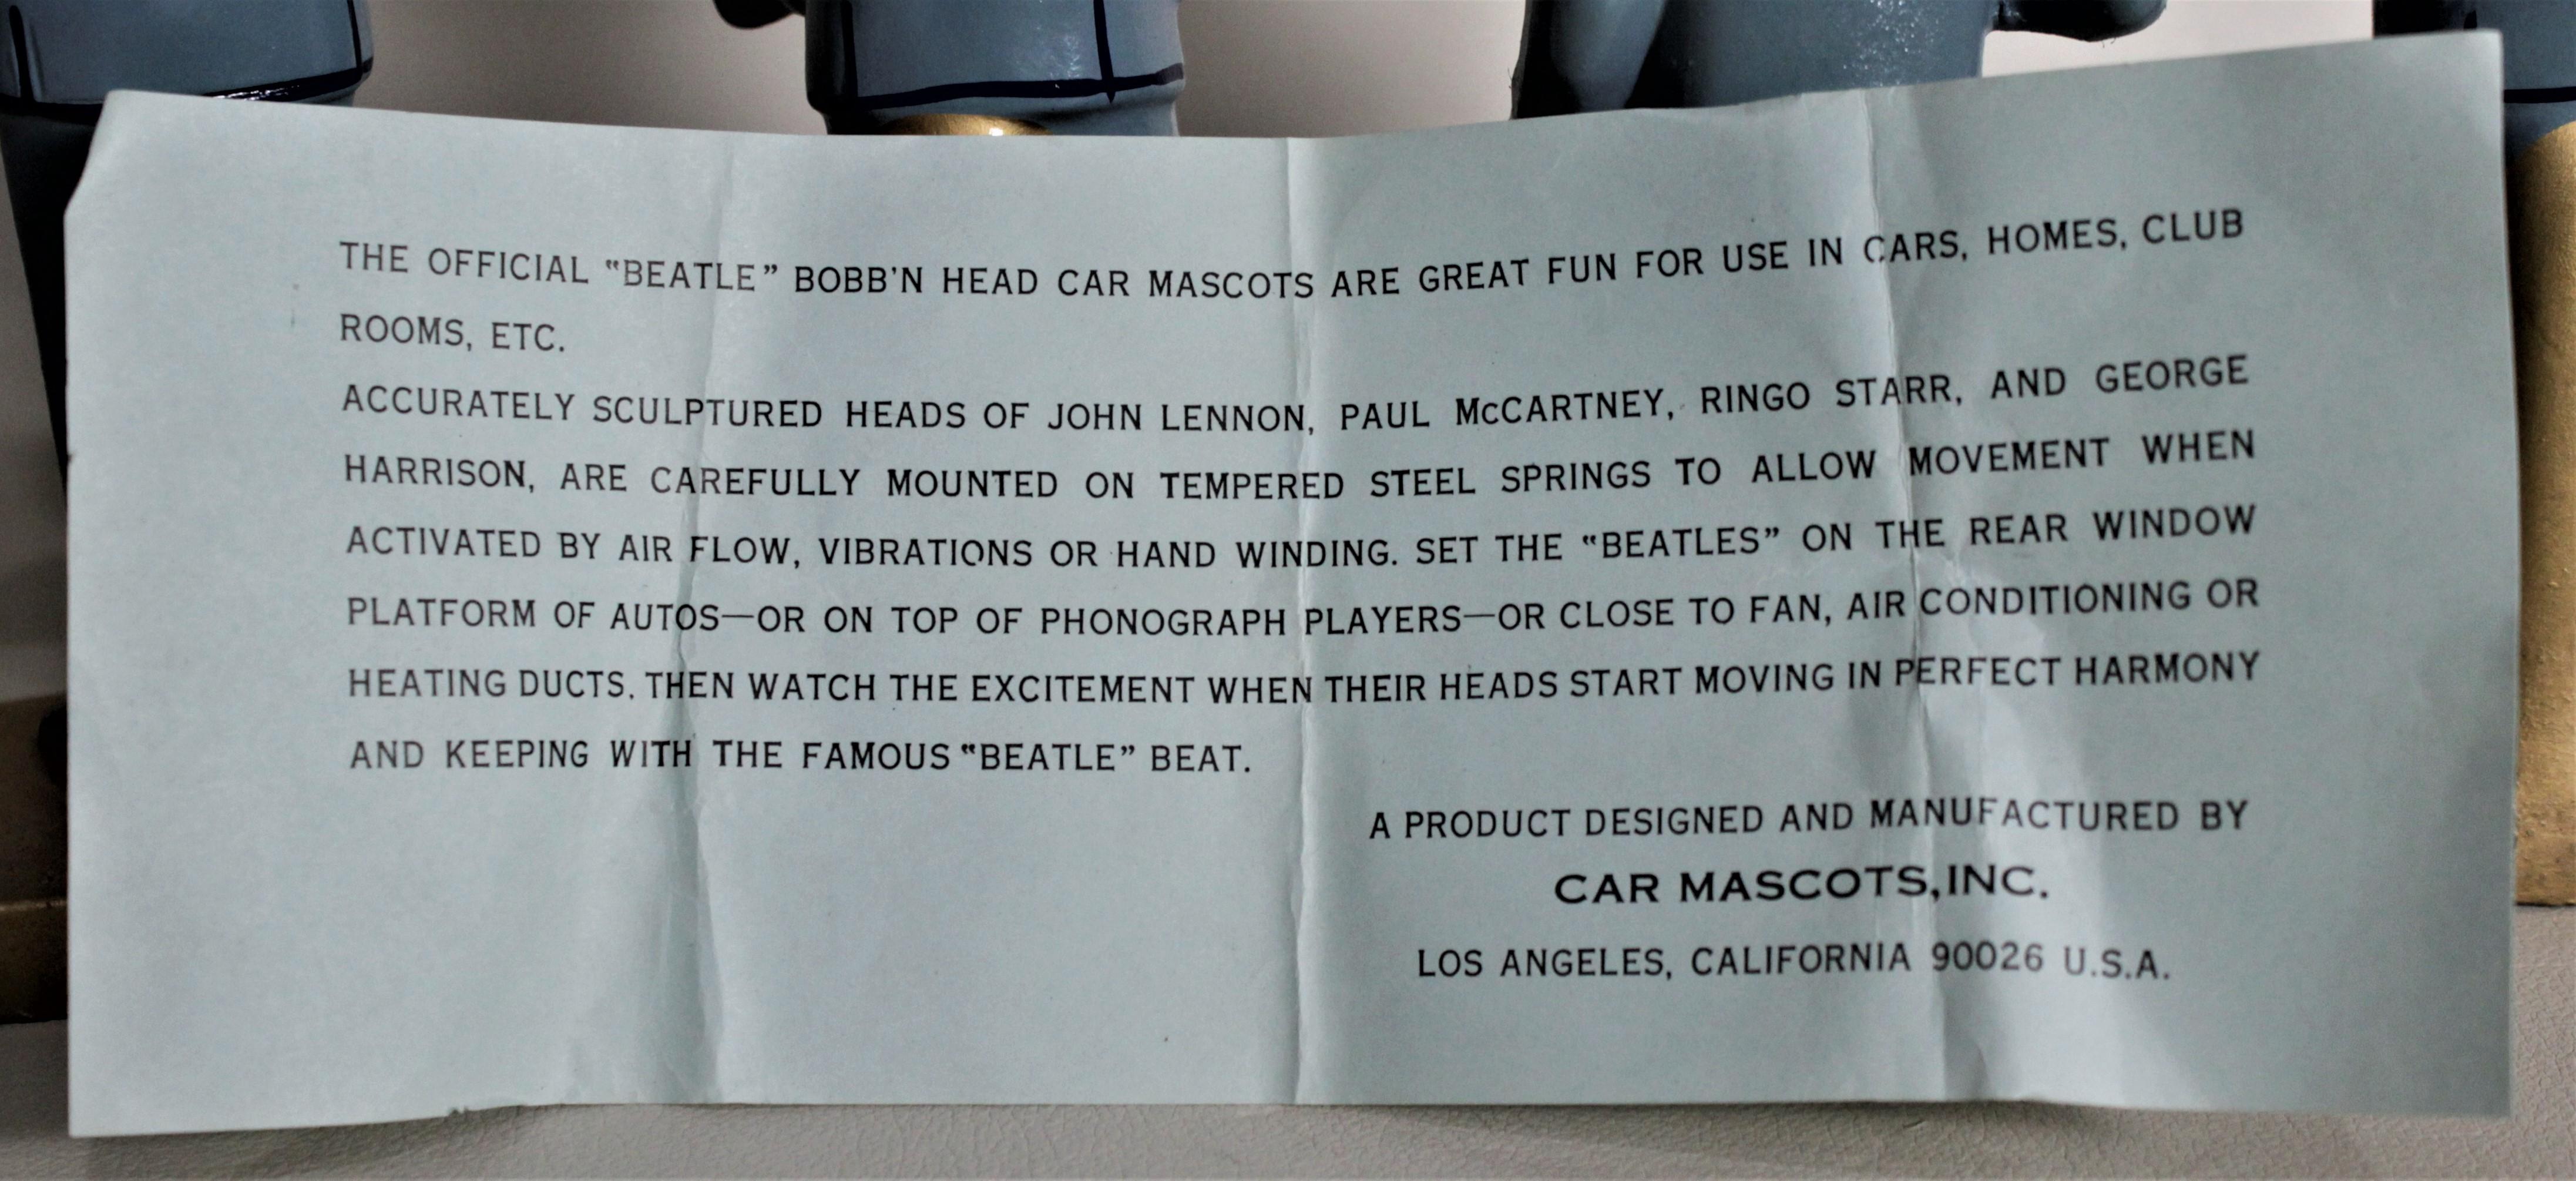 Original 1964 Beatles Car Mascots Bobblehead Set with Box and Instruction Sheet 8